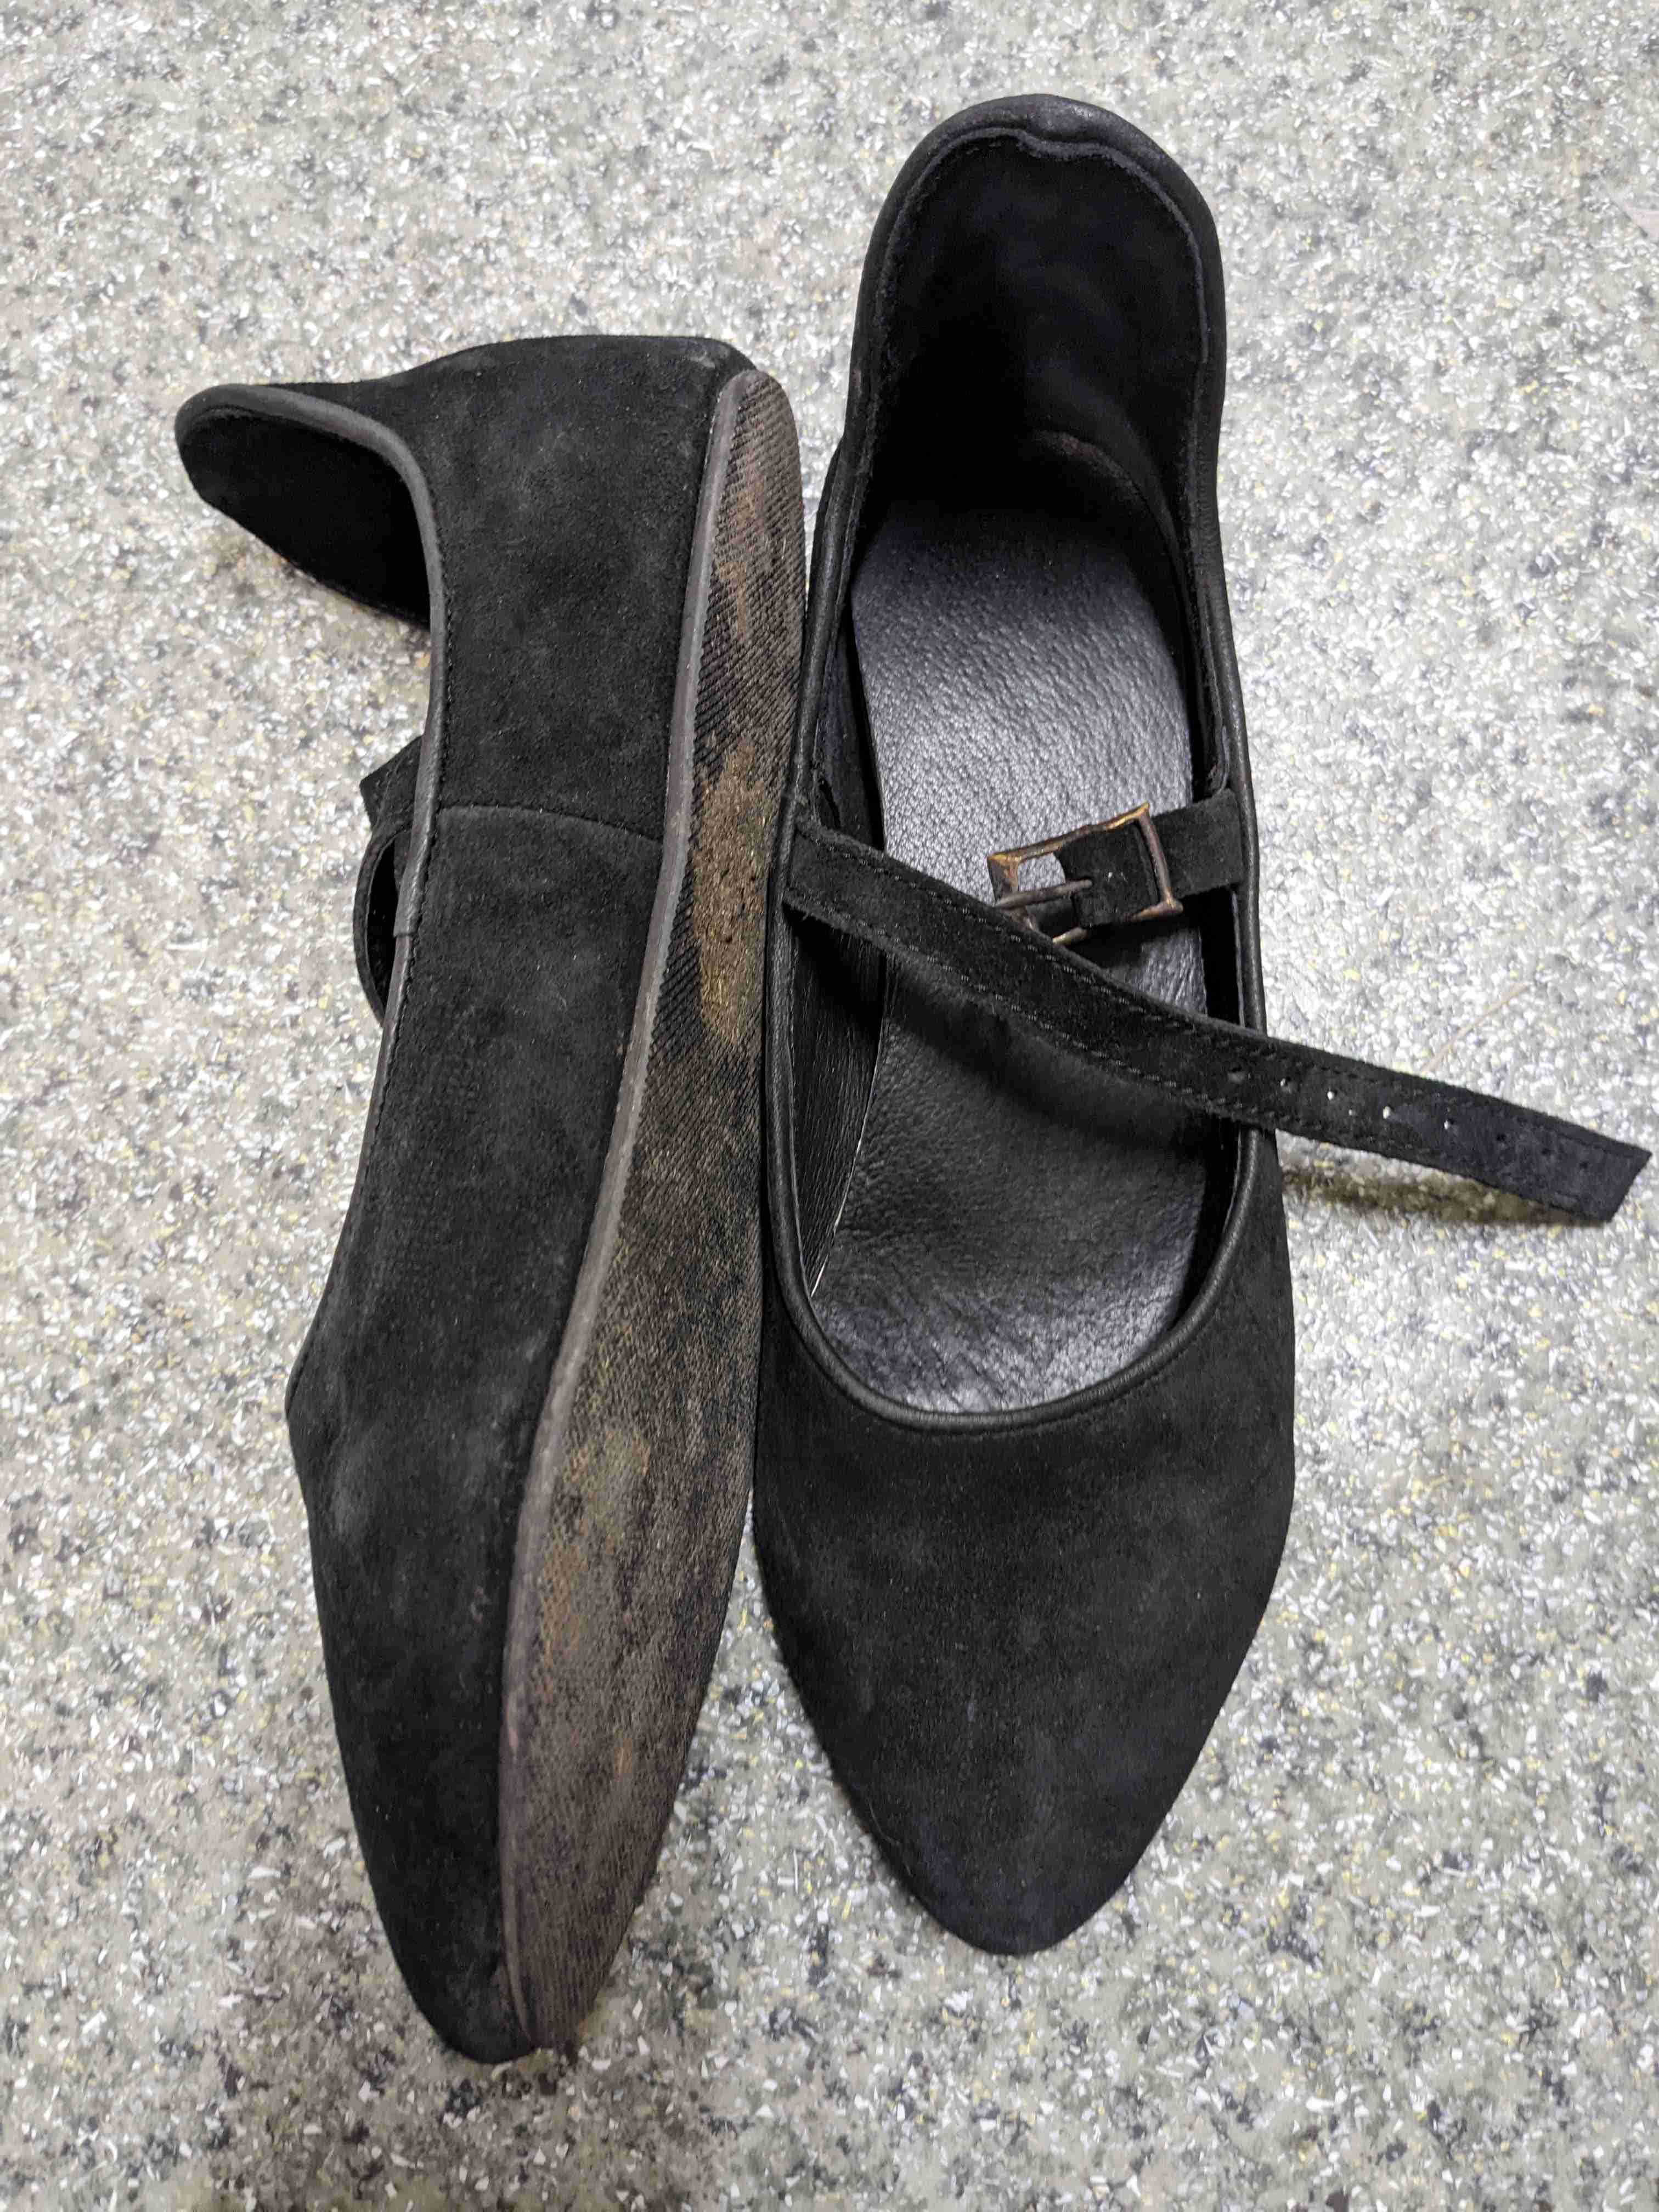 Sale Townswoman Medieval Shoes